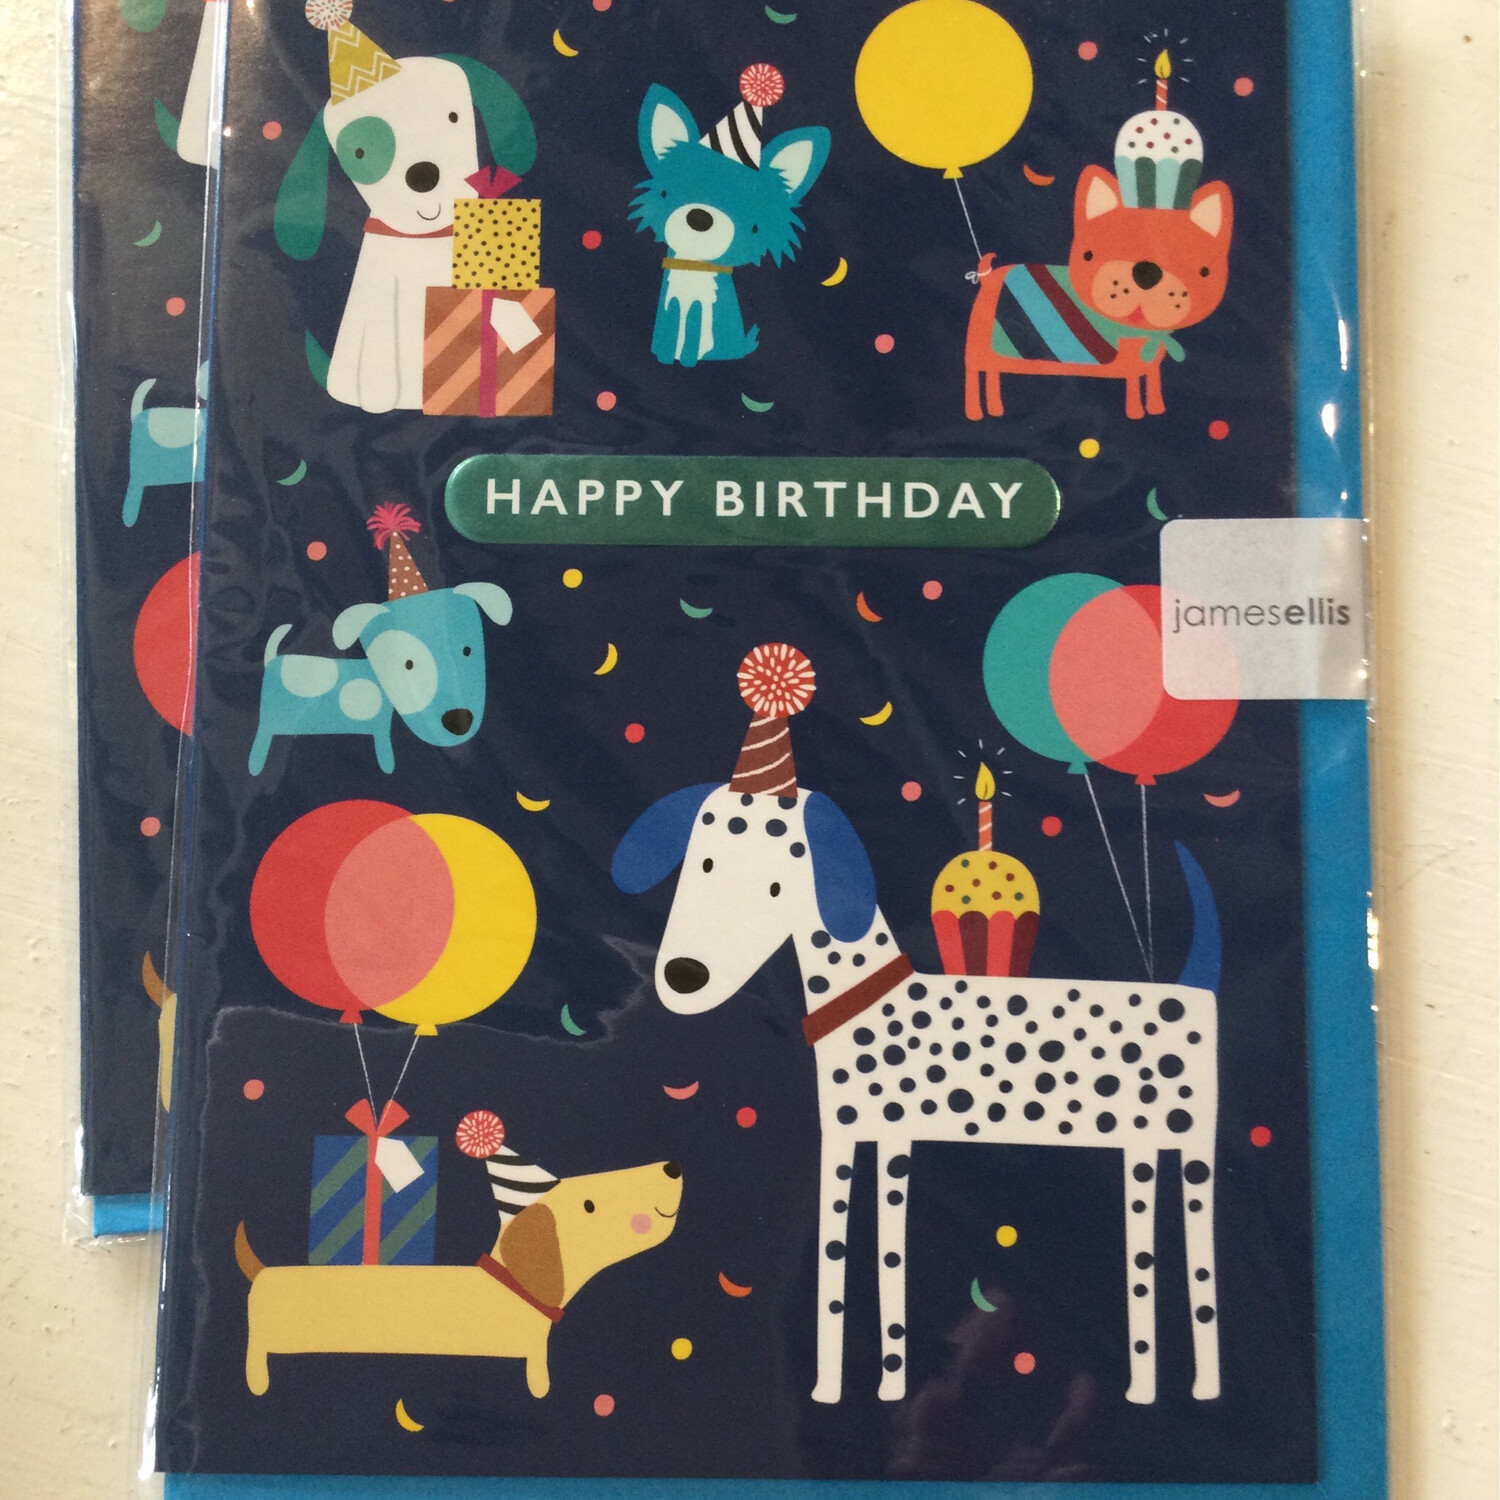 James Ellis Kids Cards , Birthday Cats , Dogs & Rabbits